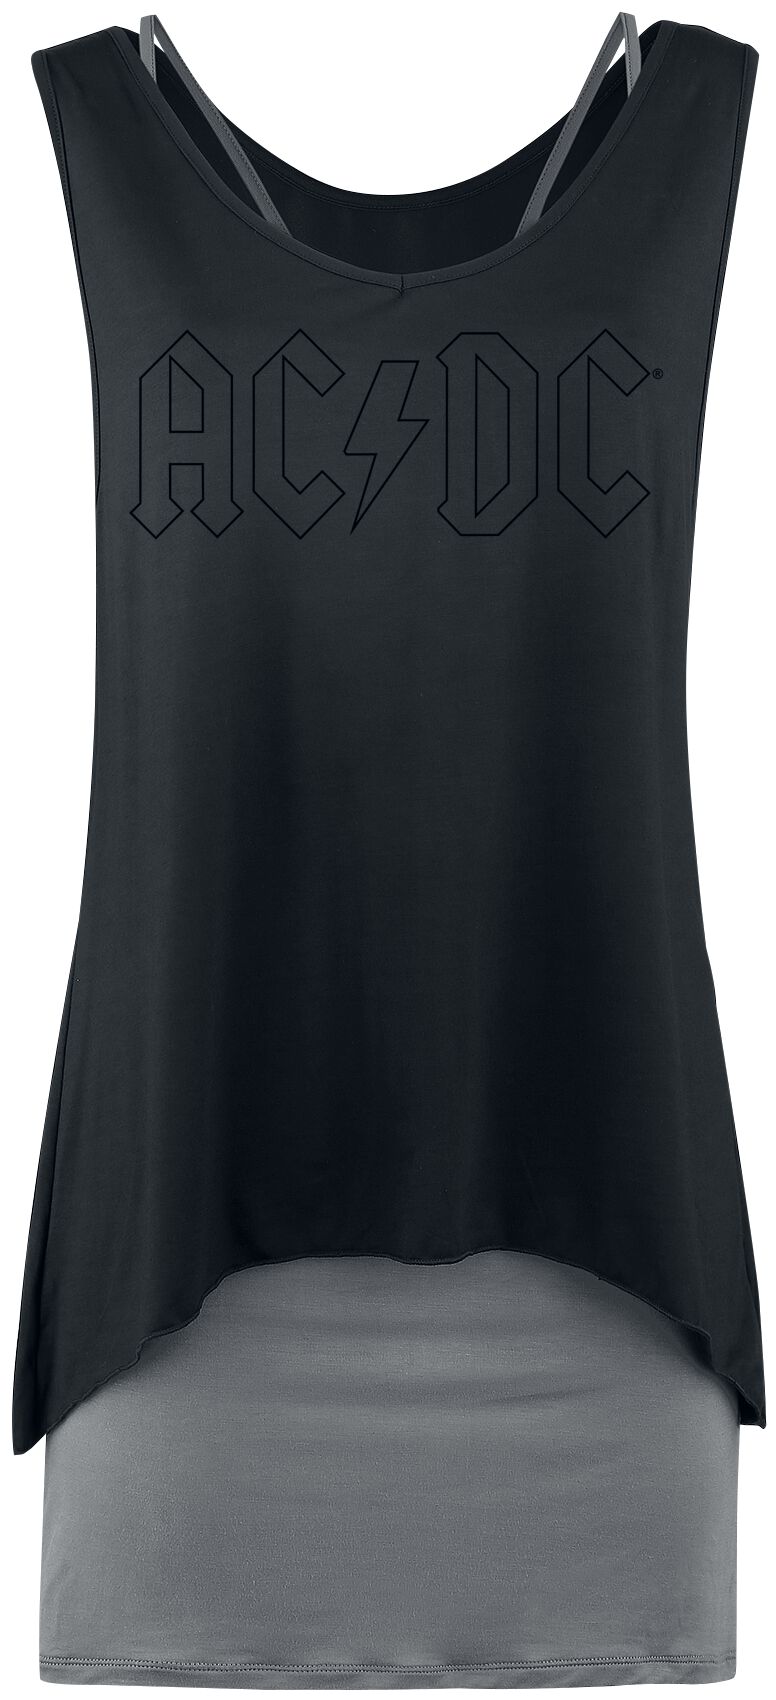 Image of AC/DC Back in Black Kleid schwarz/charcoal